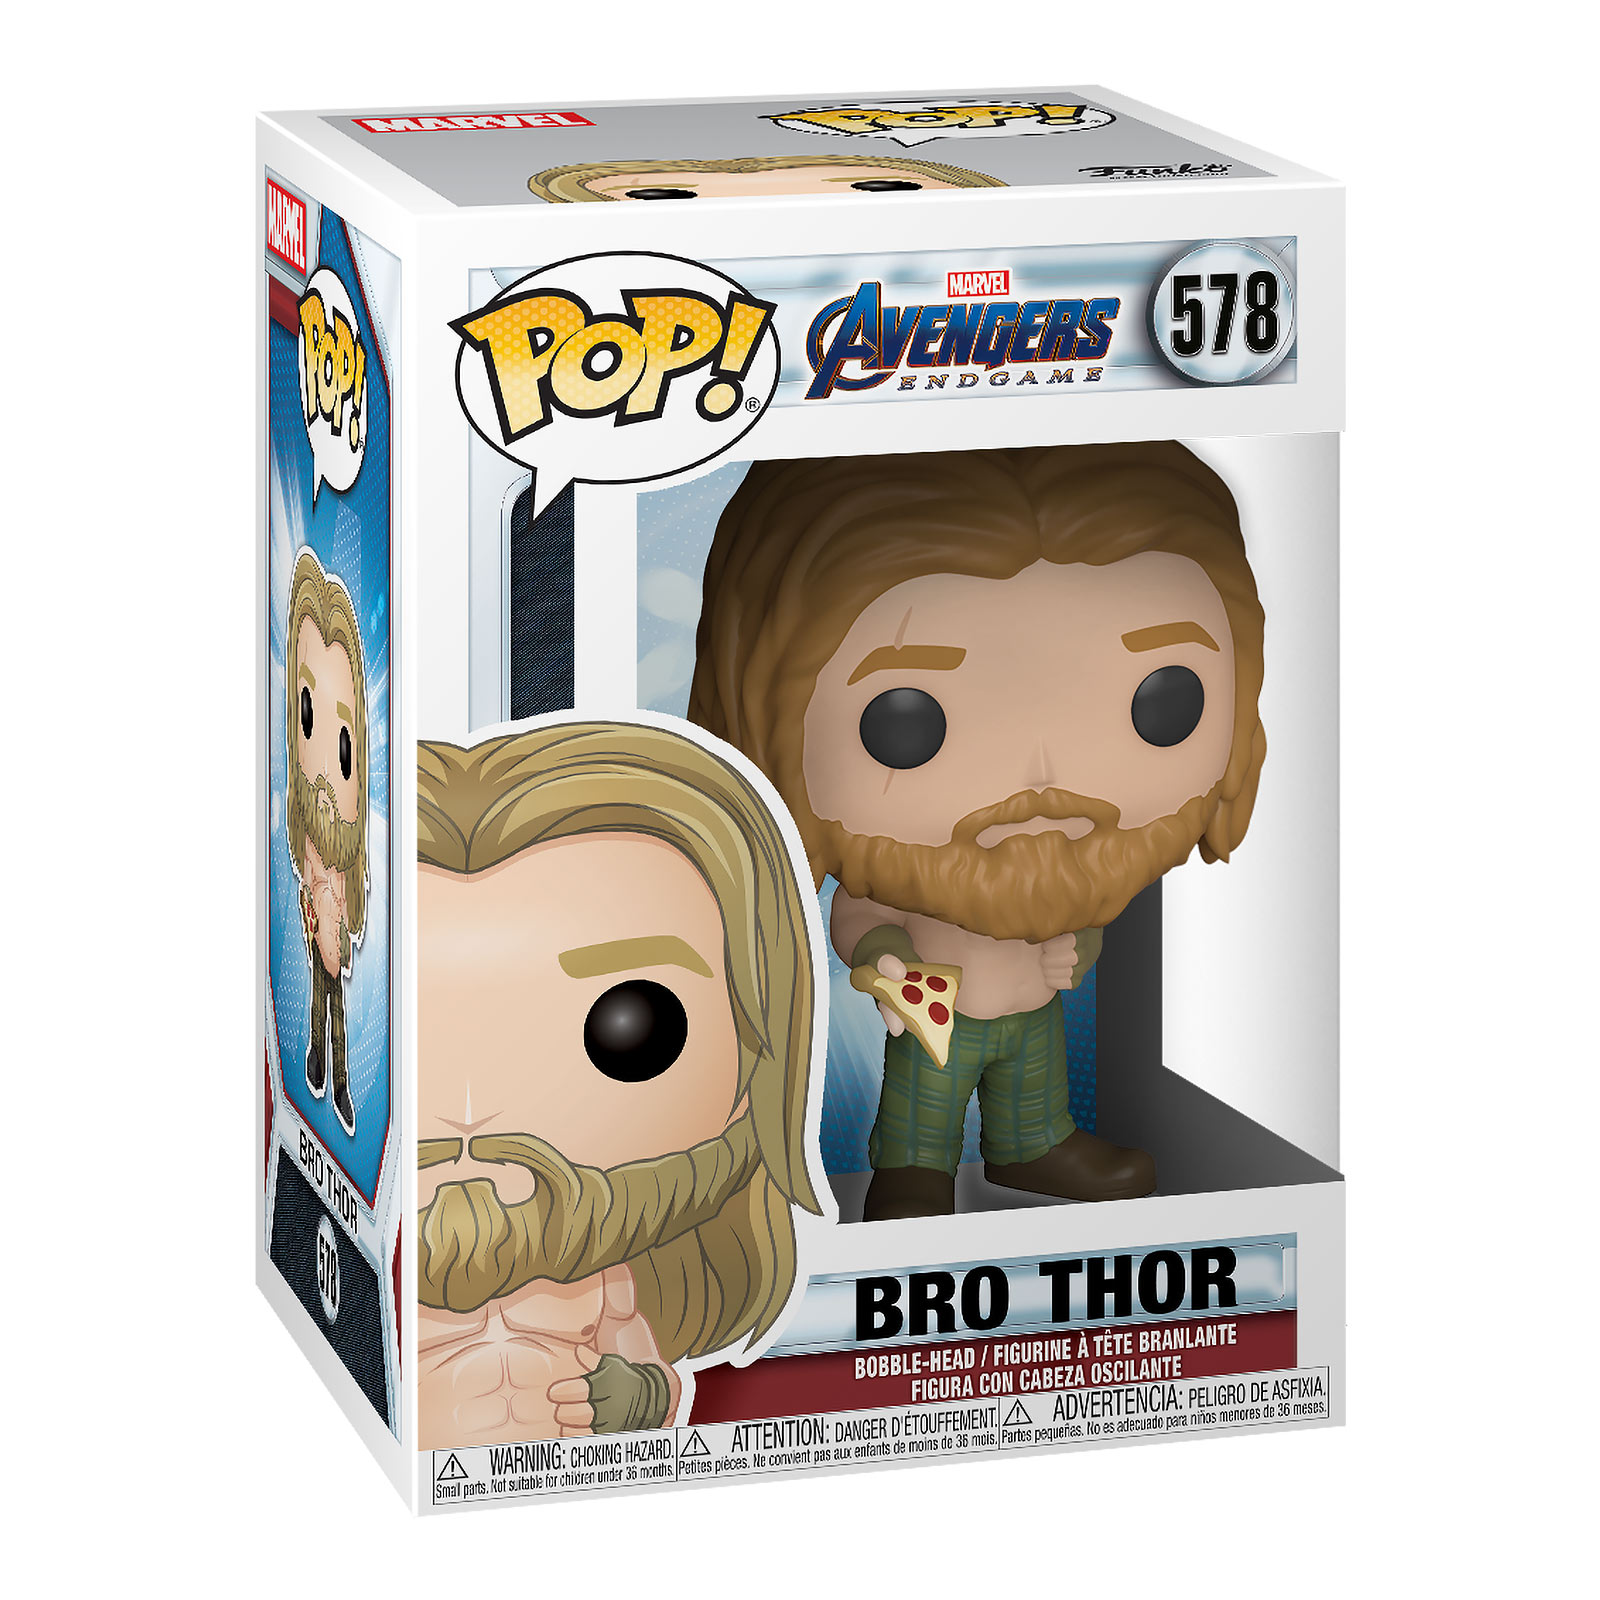 Avengers - Bro Thor avec Pizza Endgame Figurine Funko Pop à tête branlante